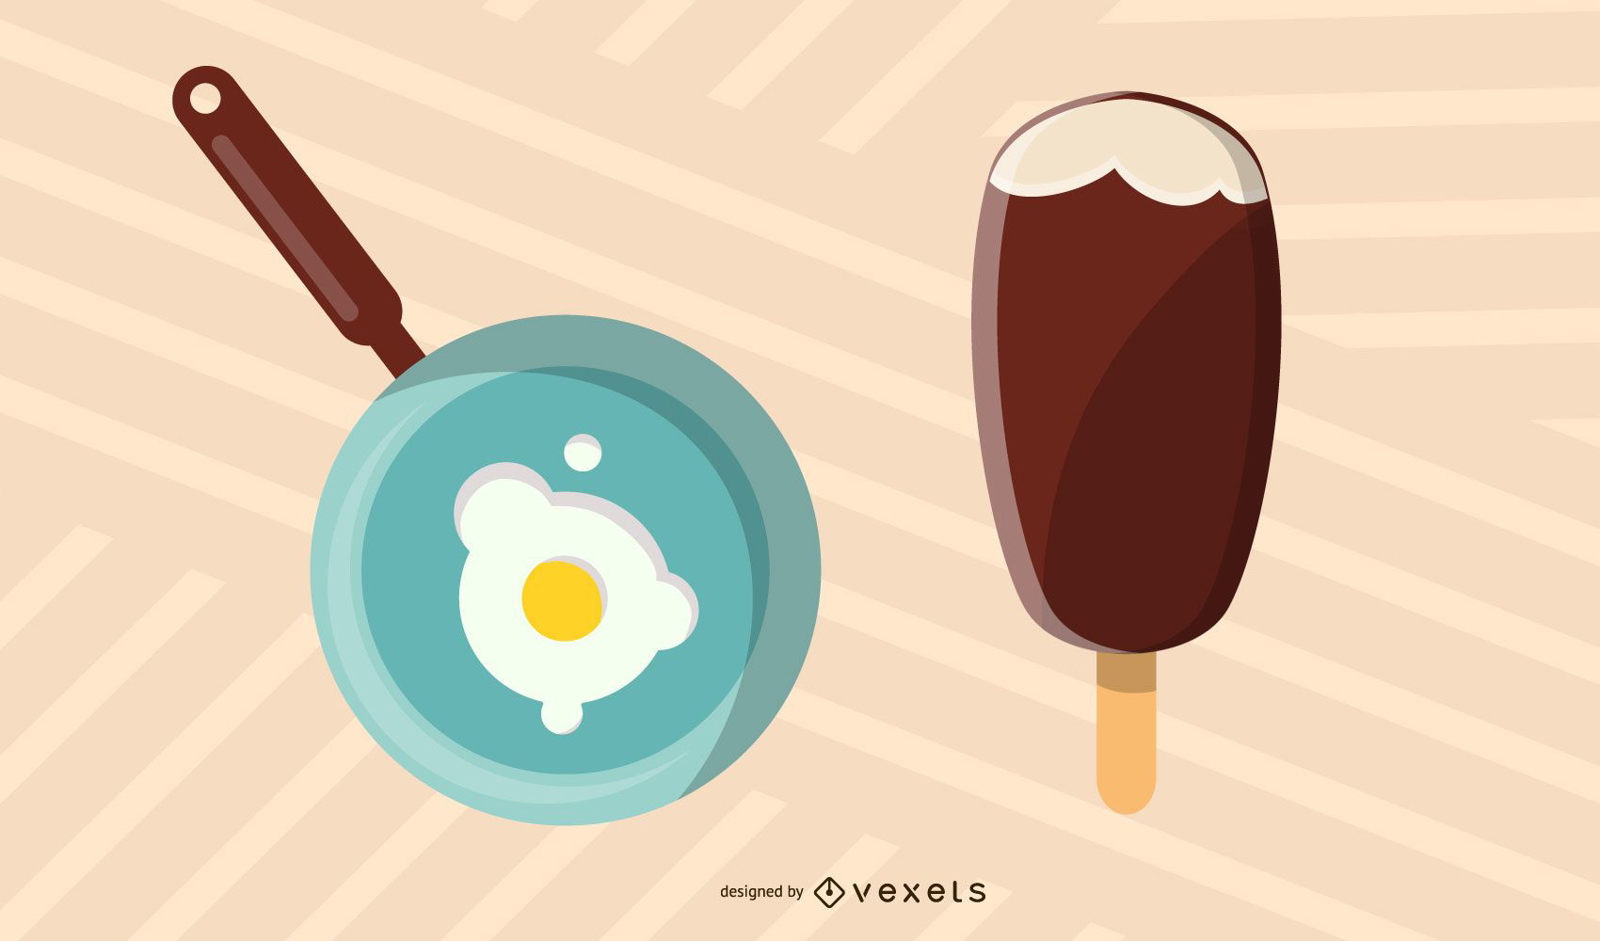 Fried egg and ice cream illustration